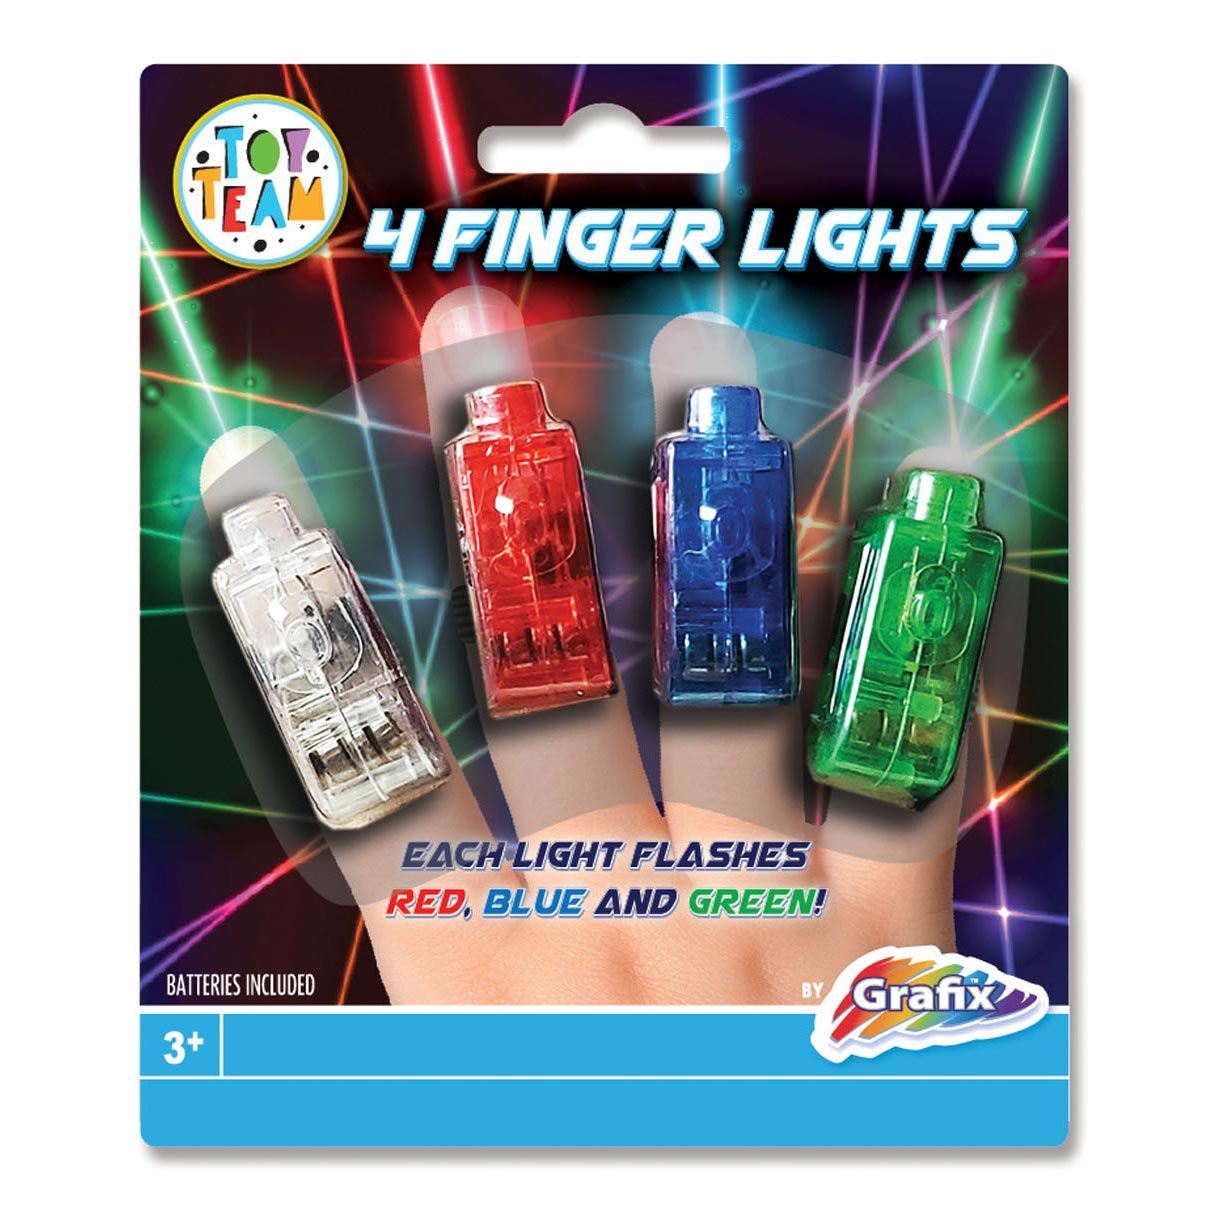 https://www.jouetprive.com/media/catalog/product/cache/b53f5701c29652b6c3eaff90fe1214f0/image/65038d4eb/grafix-finger-lights-4pcs-710001.jpg